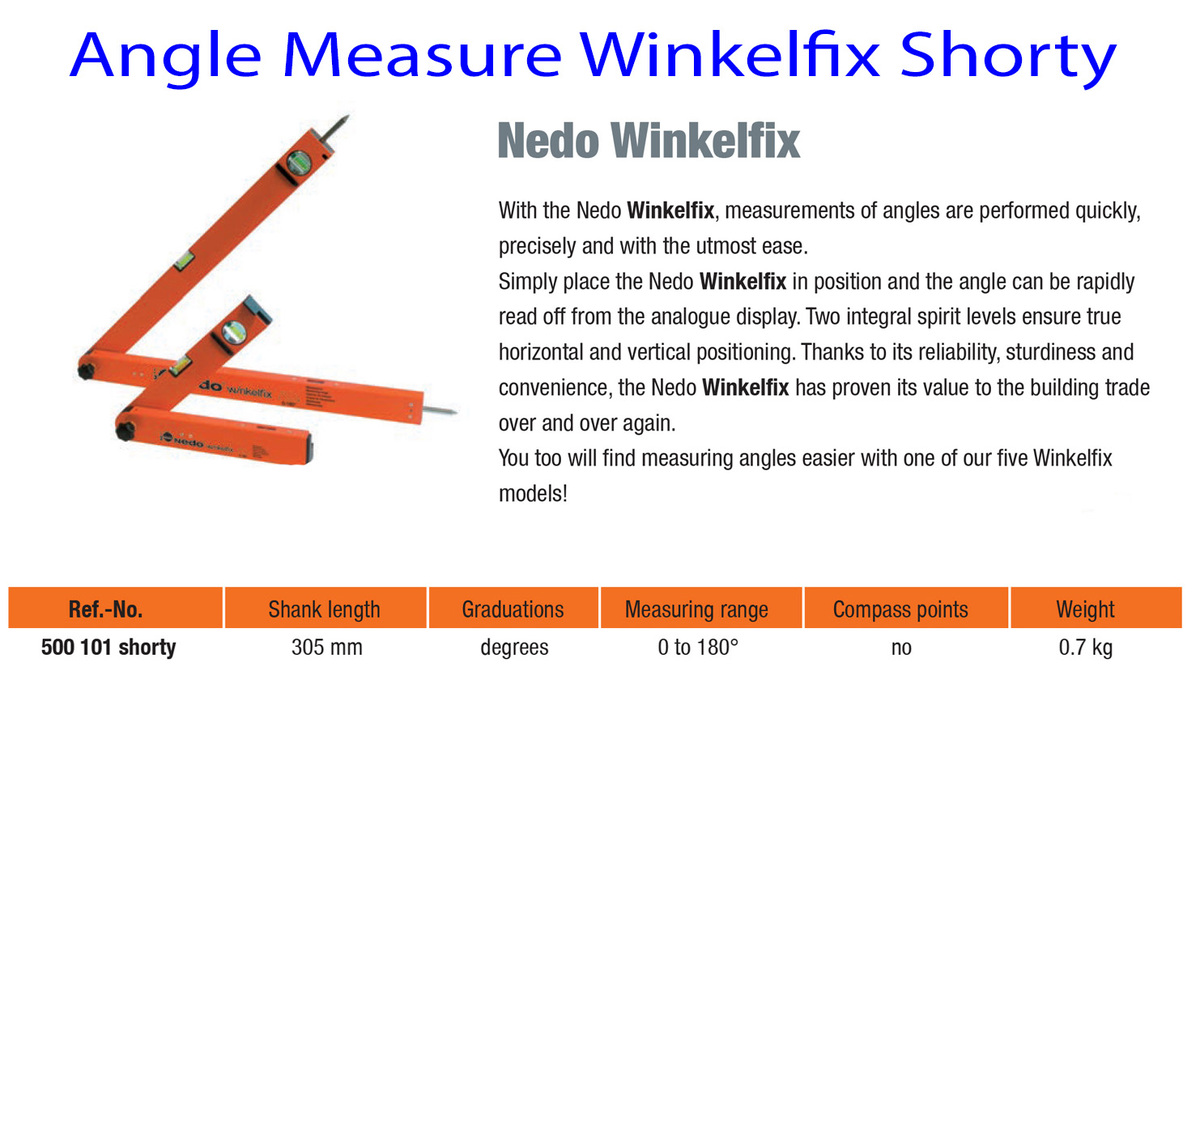 Angle-Measure-Winkelfix-Shorty-info.jpg#